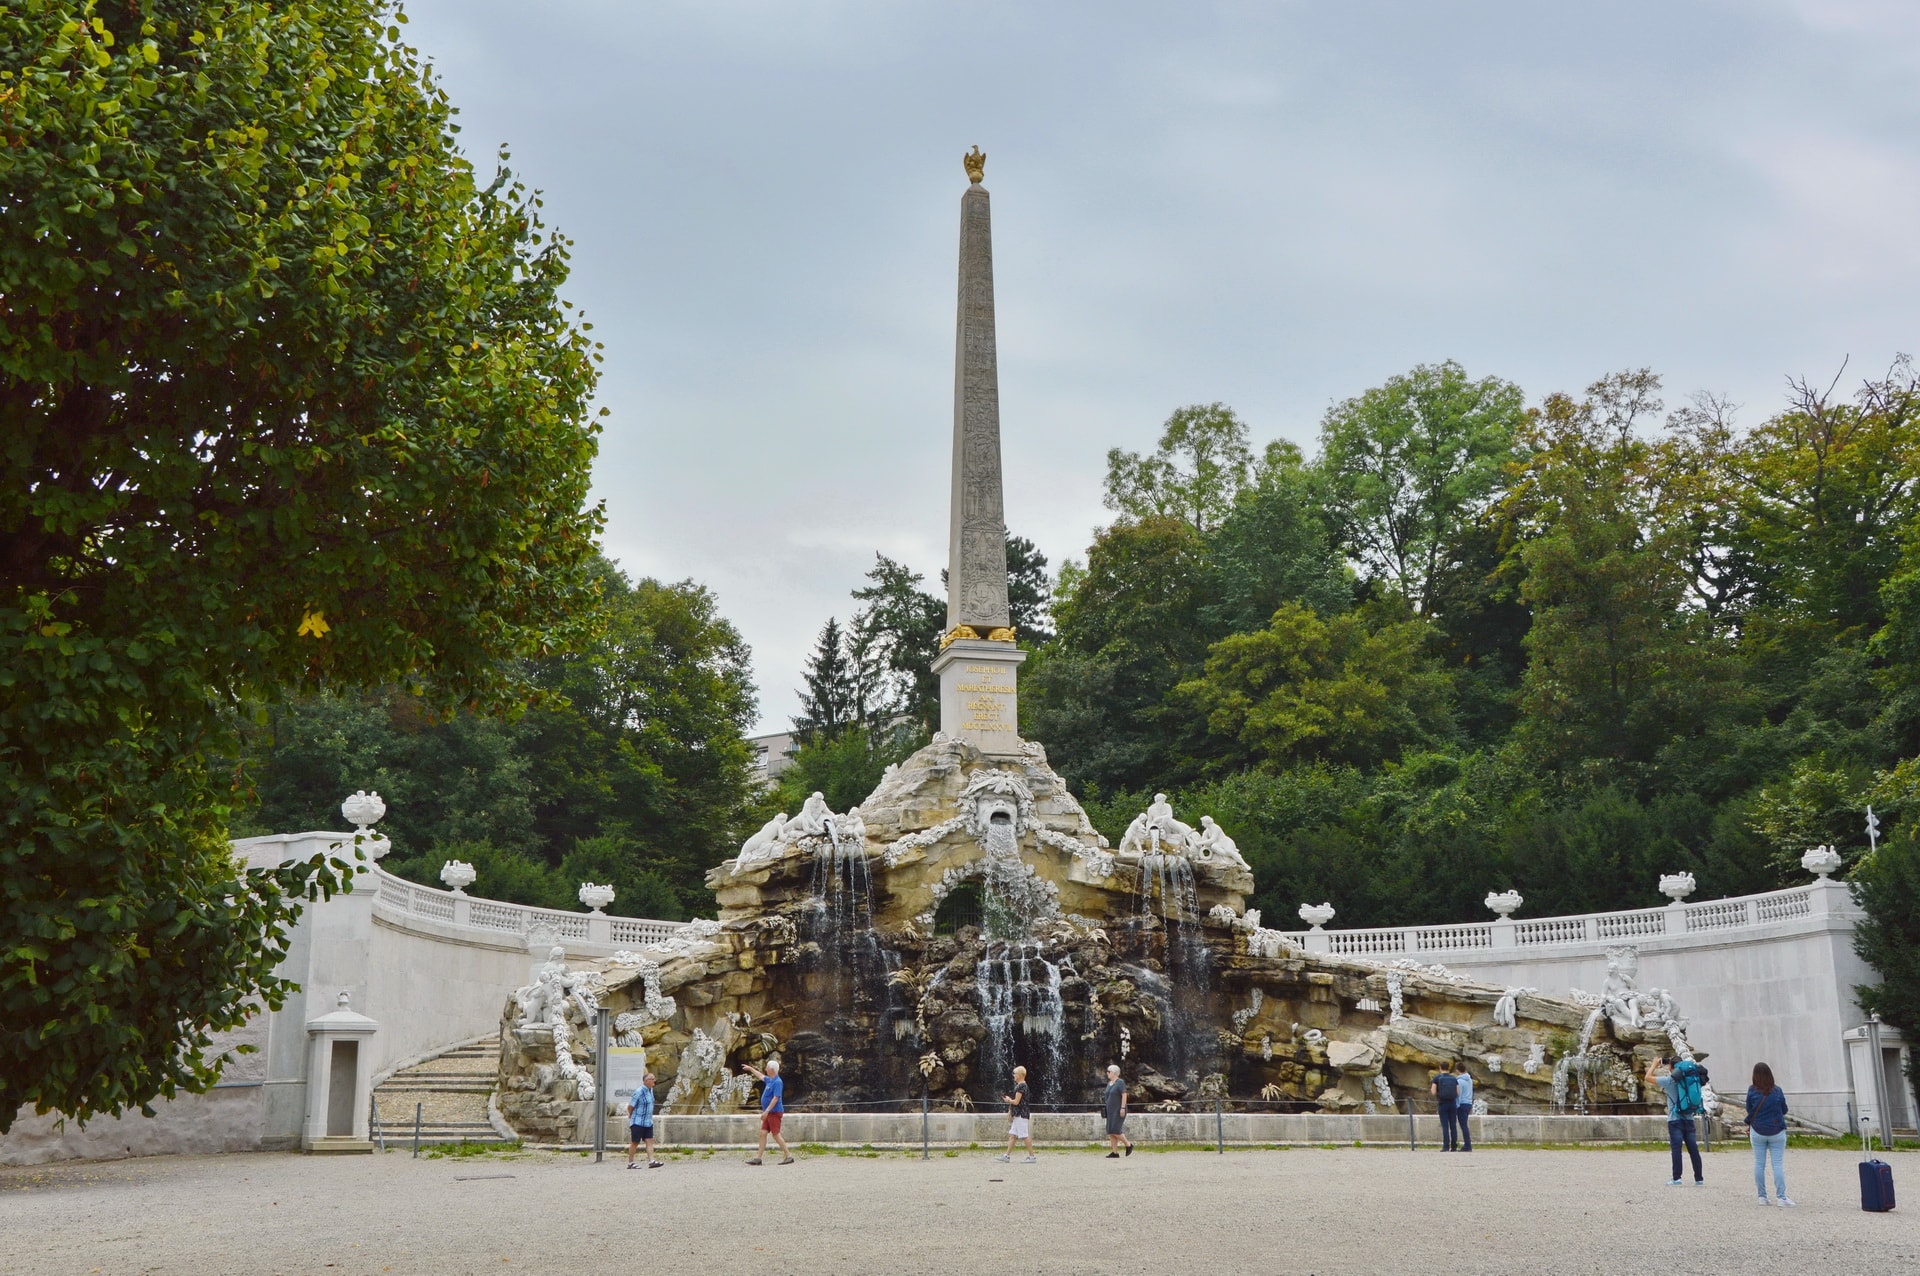 Obelisk Fountain in the gardens of the Schönbrunn Palace